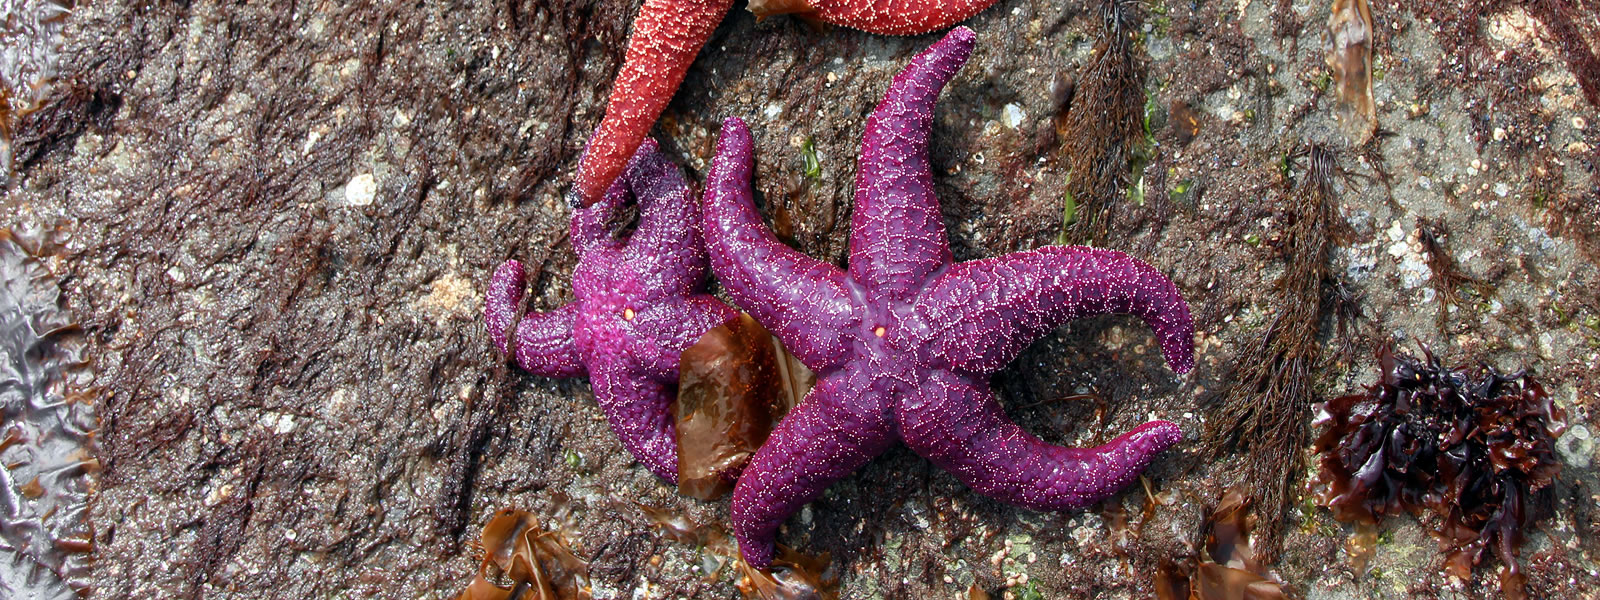 Two purple sea stars on rock surface